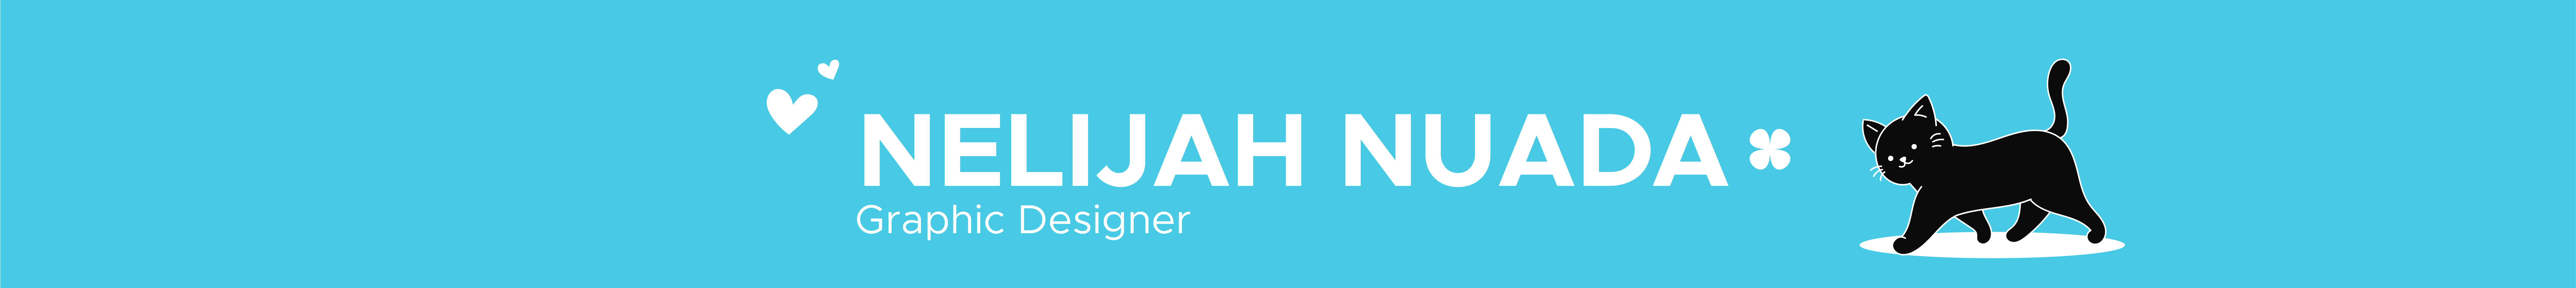 Nelijah Nuada's profile banner